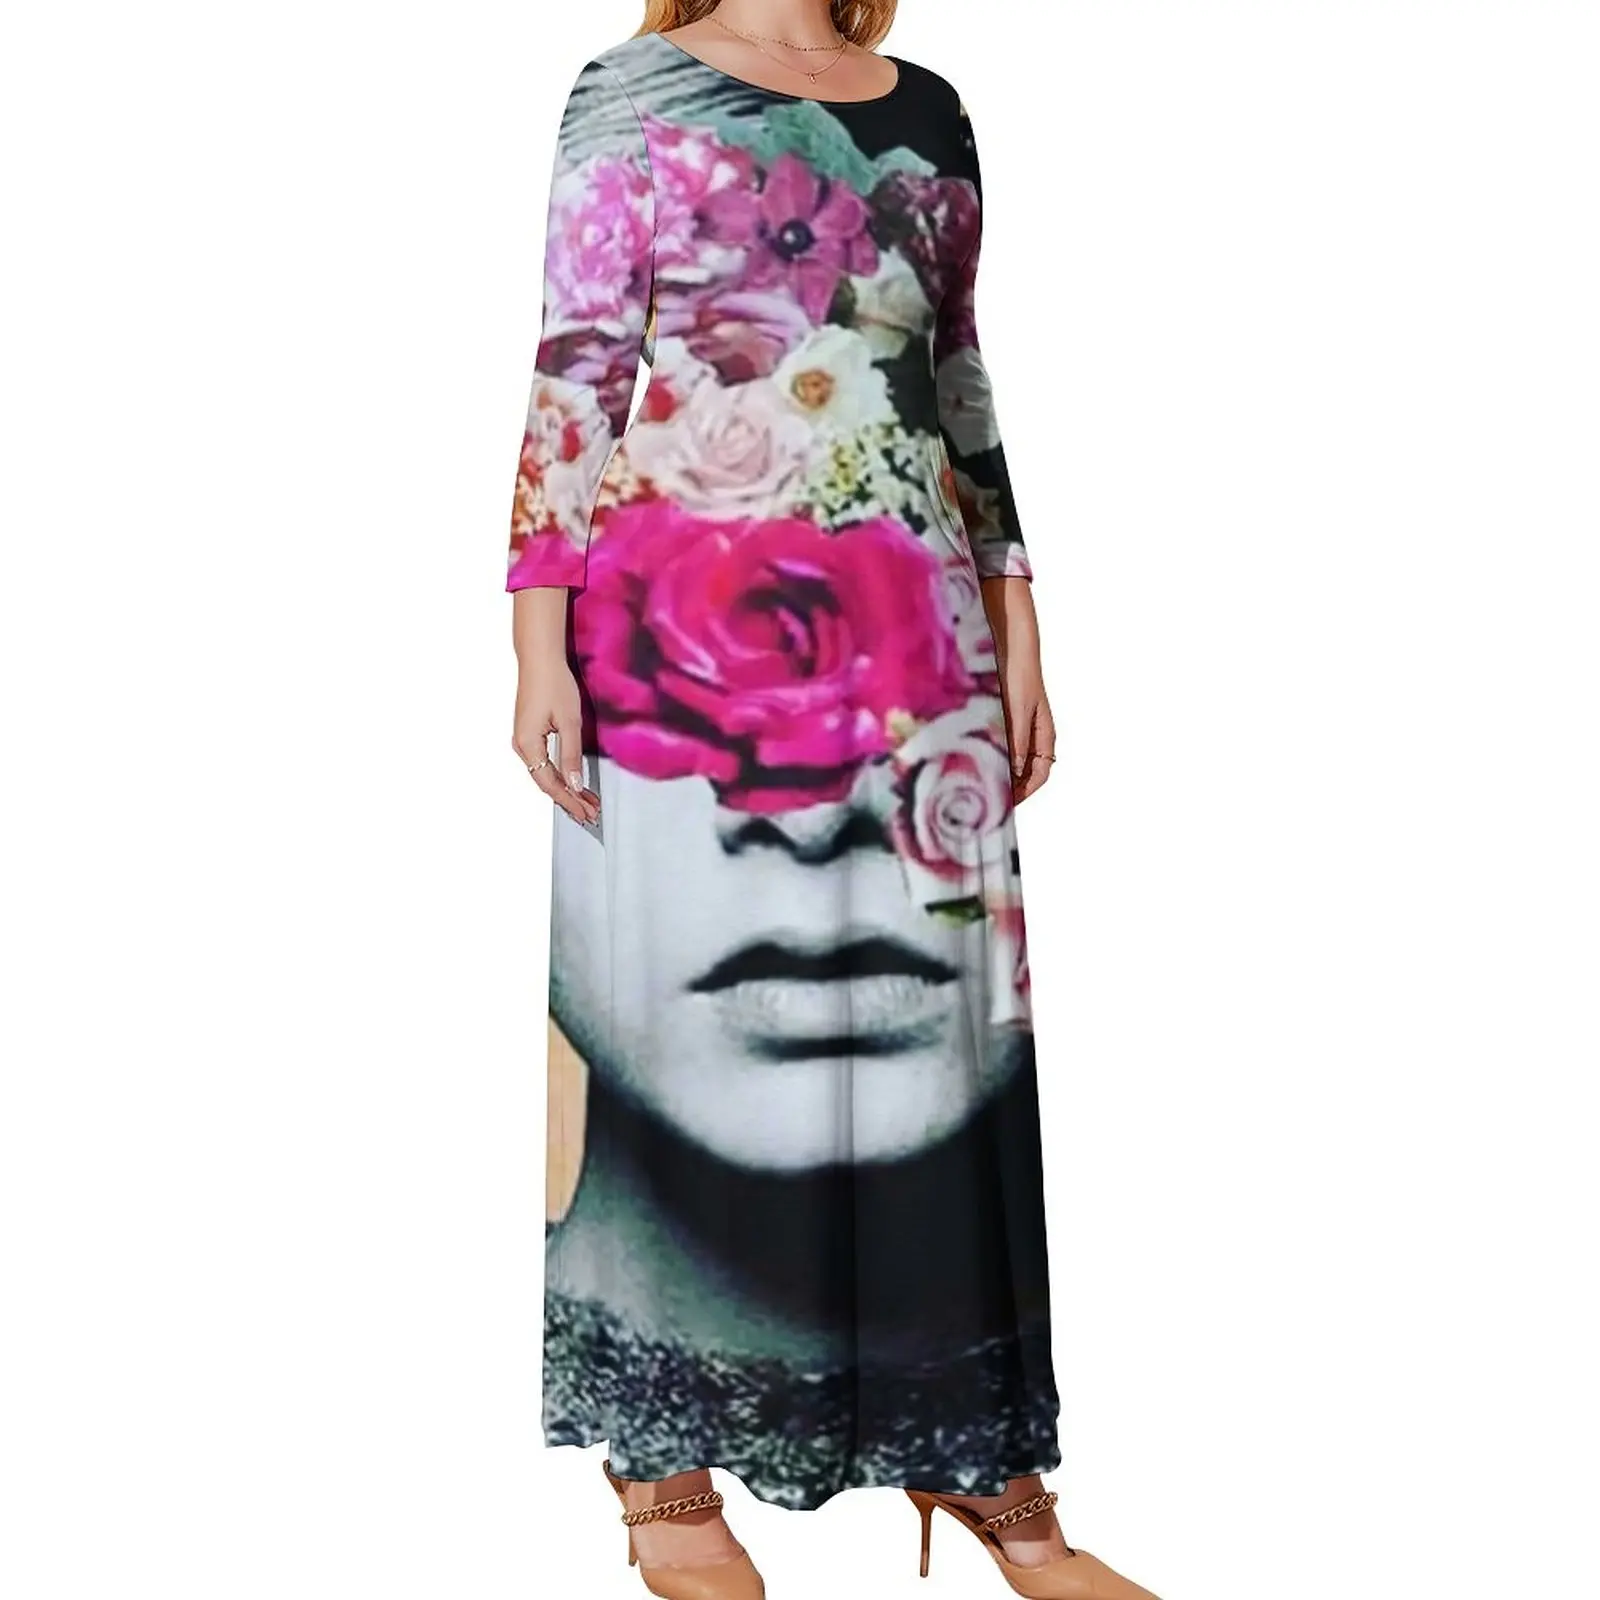 Women Head With Flowers Dress Women The Hidden Lady Elegant Maxi Dress Aesthetic Boho Beach Long Dresses Print Vestido Plus Size